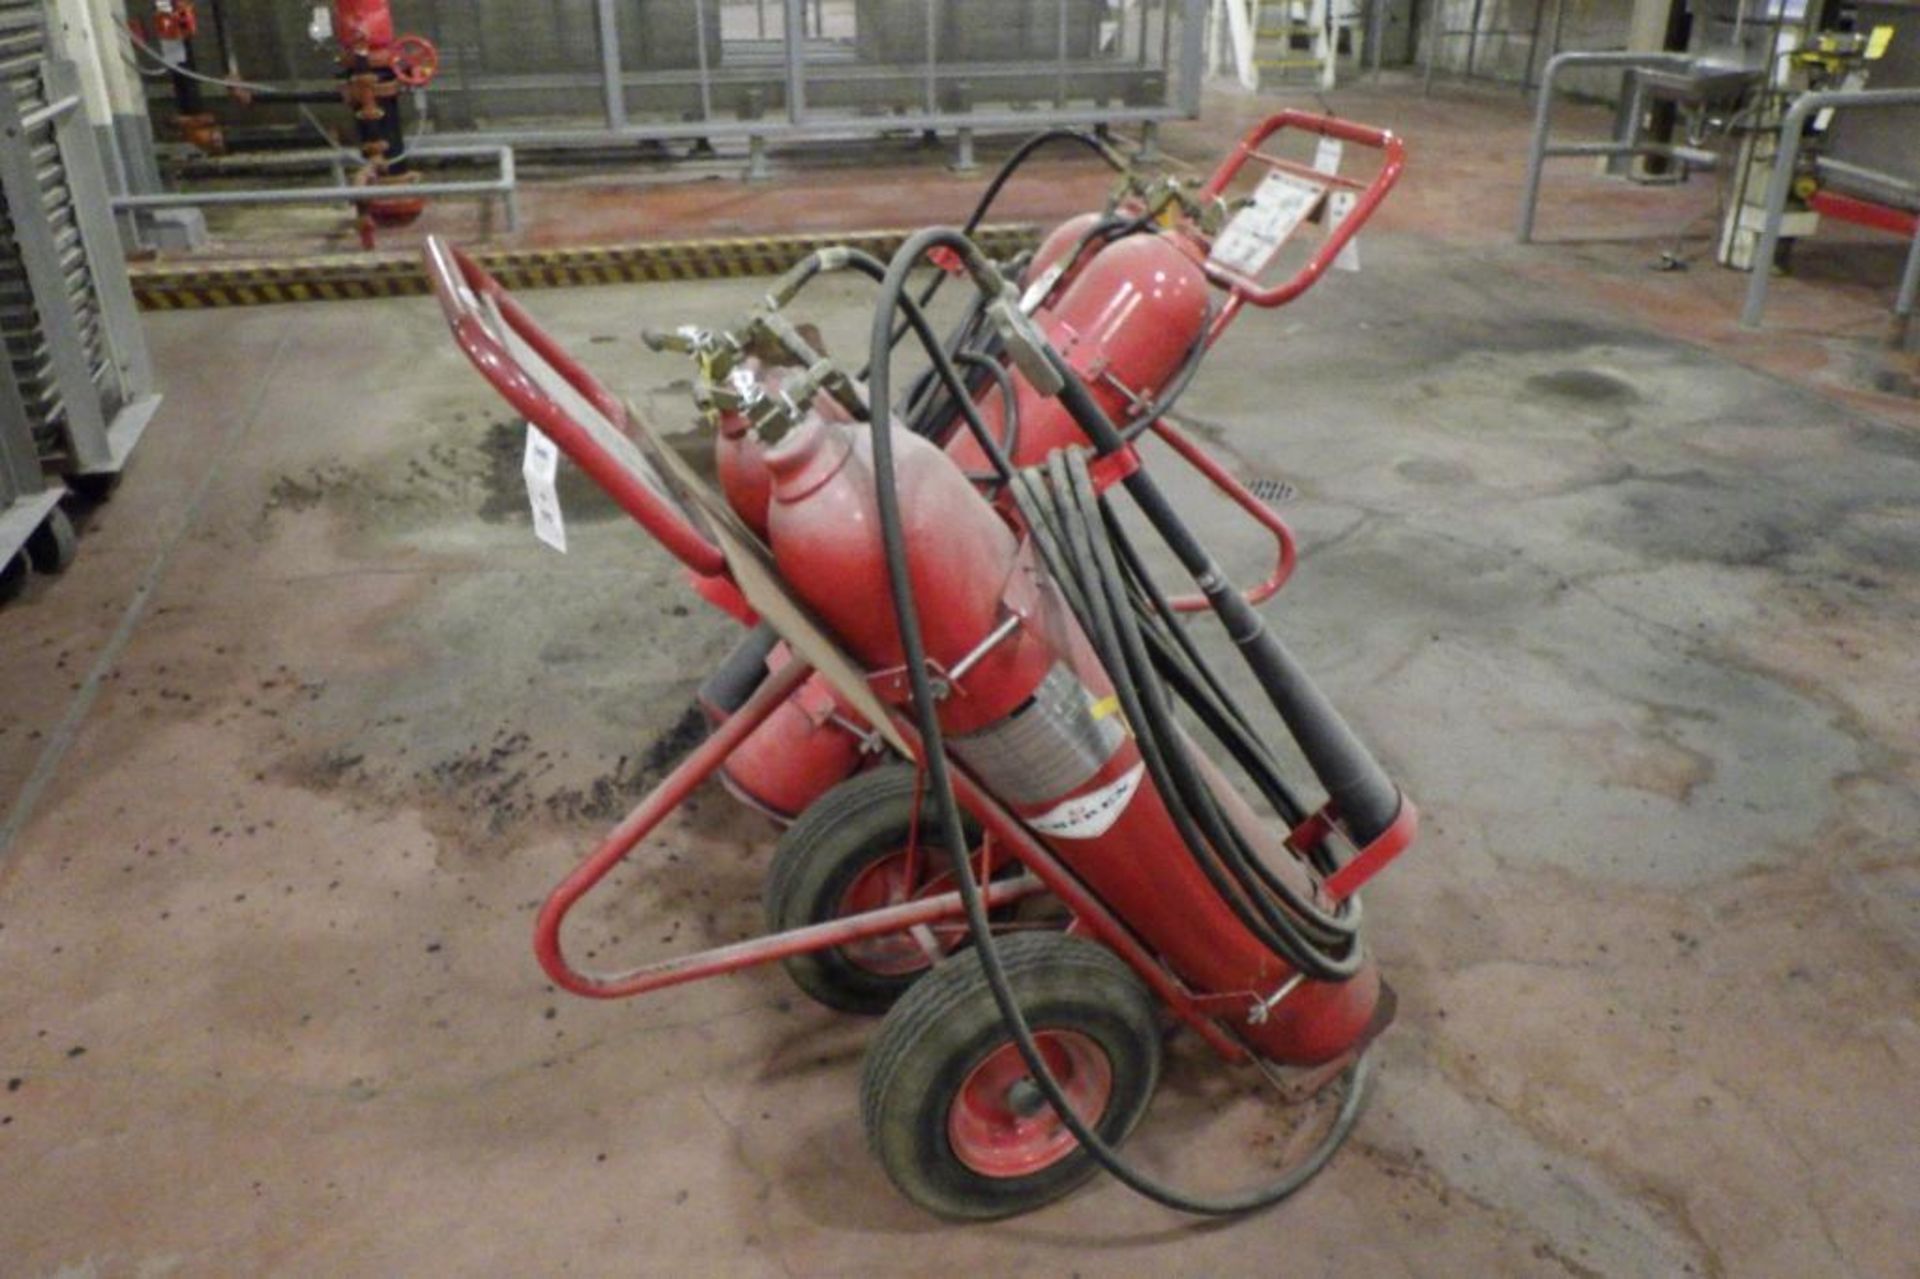 Cintas fire extinguisher carts - Image 8 of 8